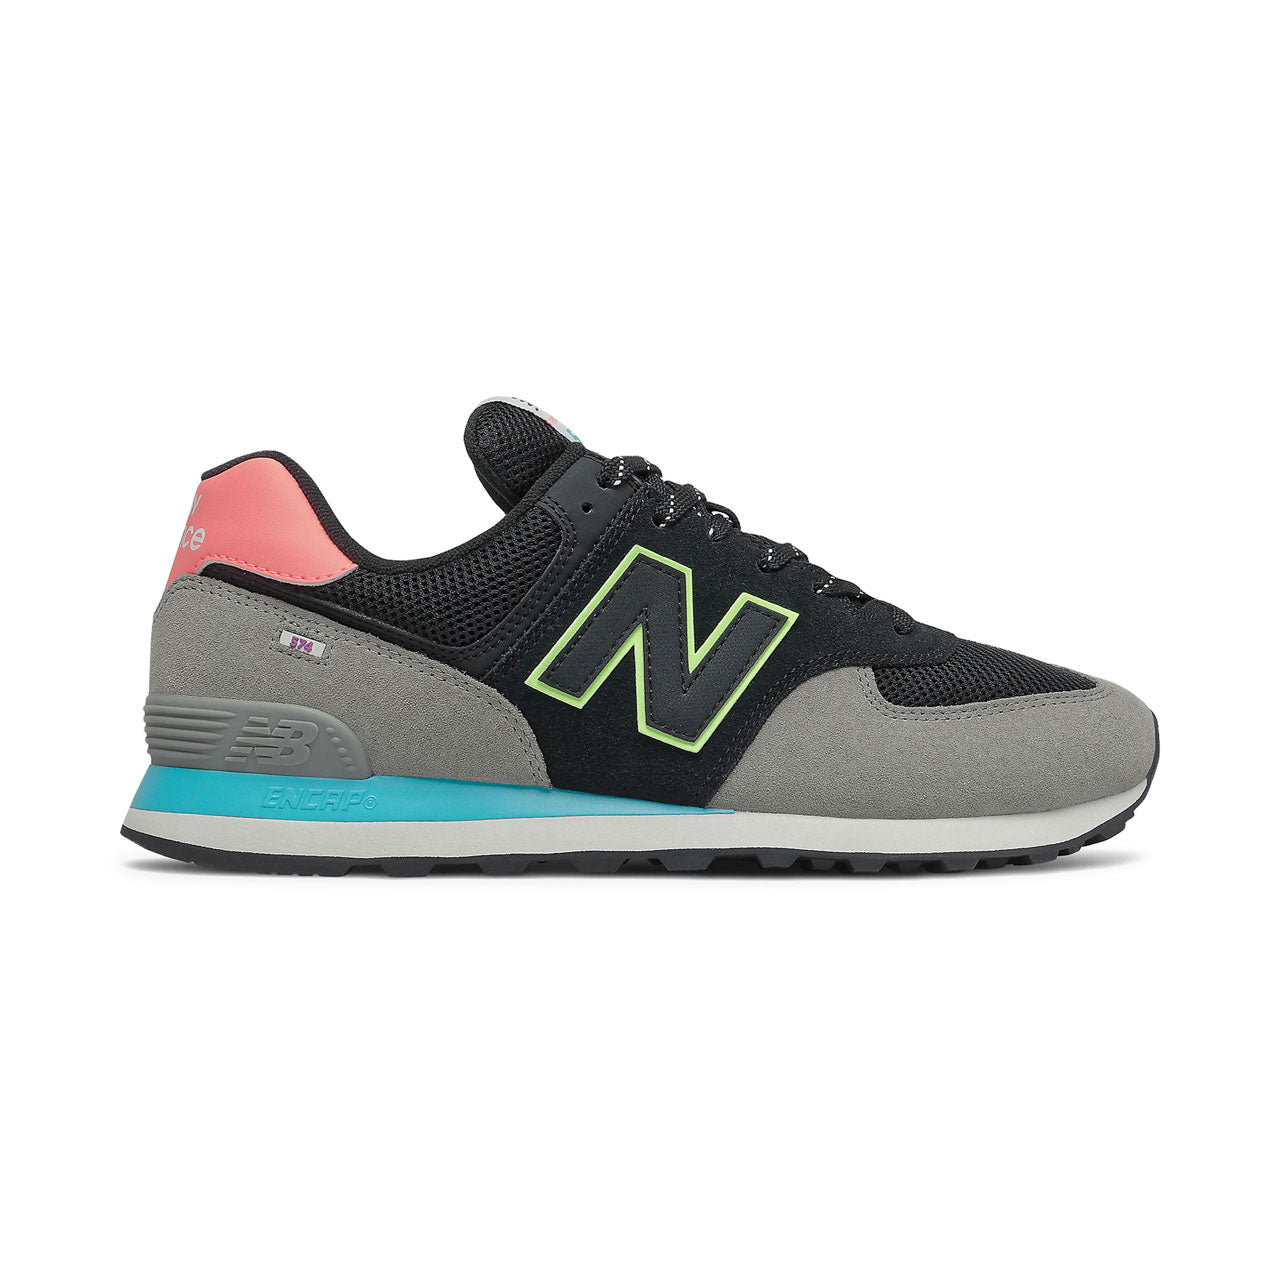 New Balance 574 Black \u0026 Pink Sneakers 